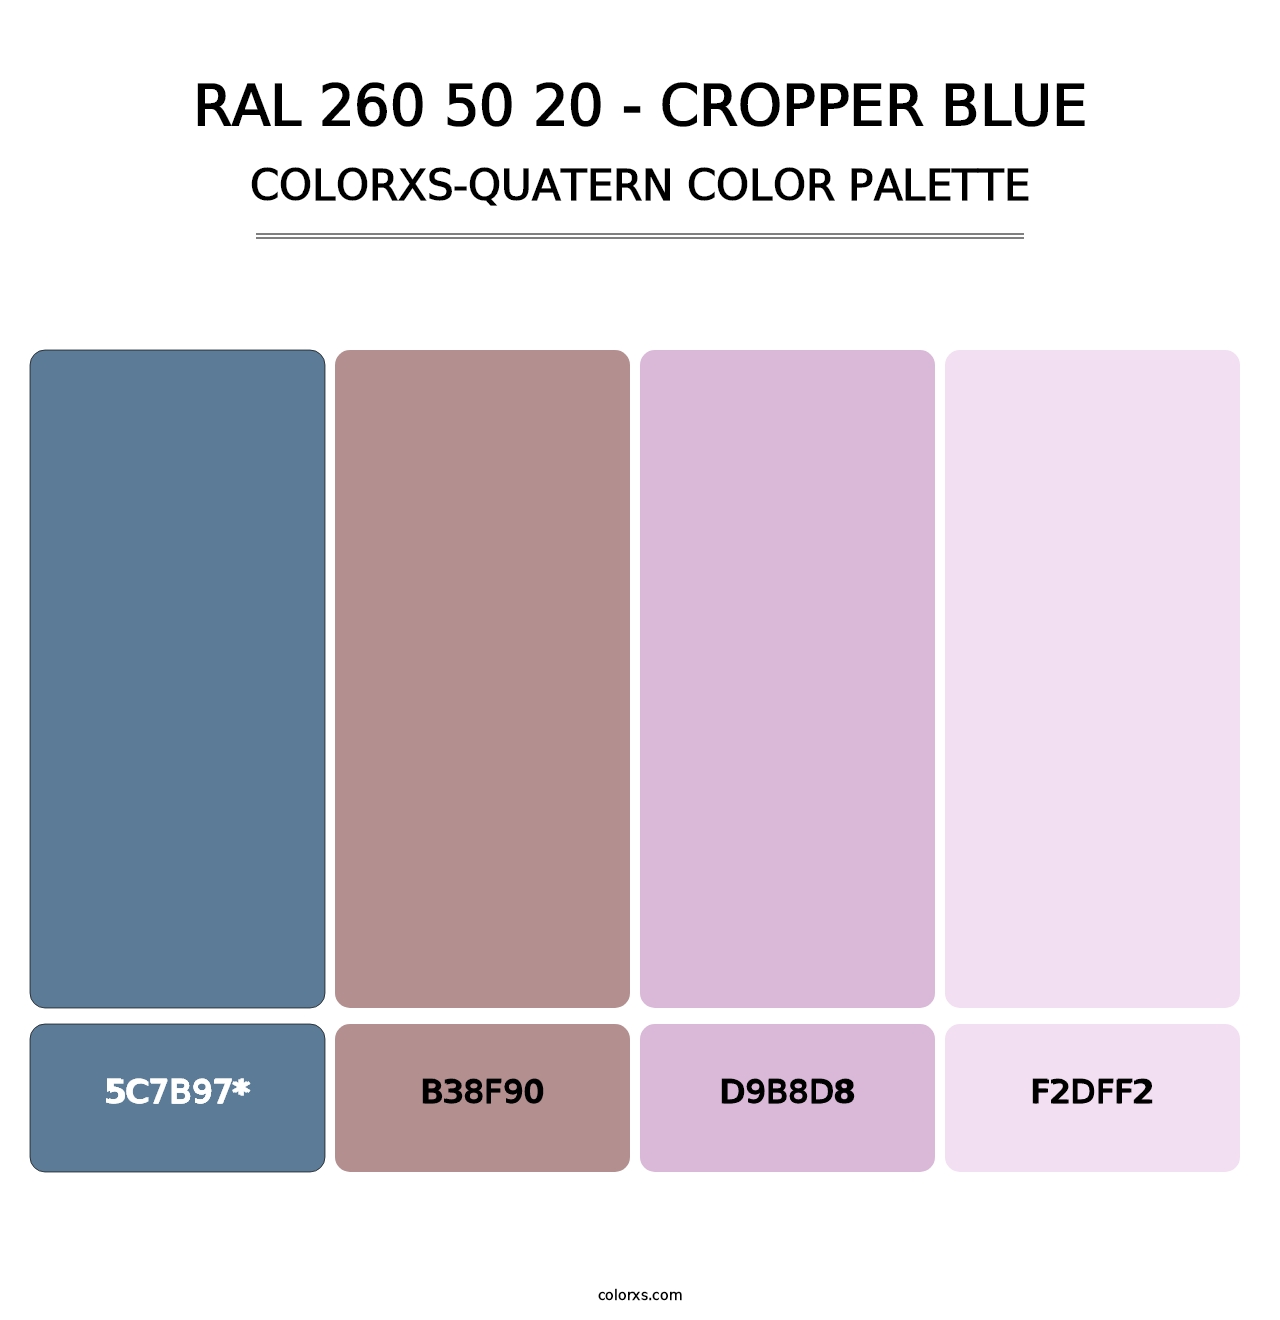 RAL 260 50 20 - Cropper Blue - Colorxs Quatern Palette